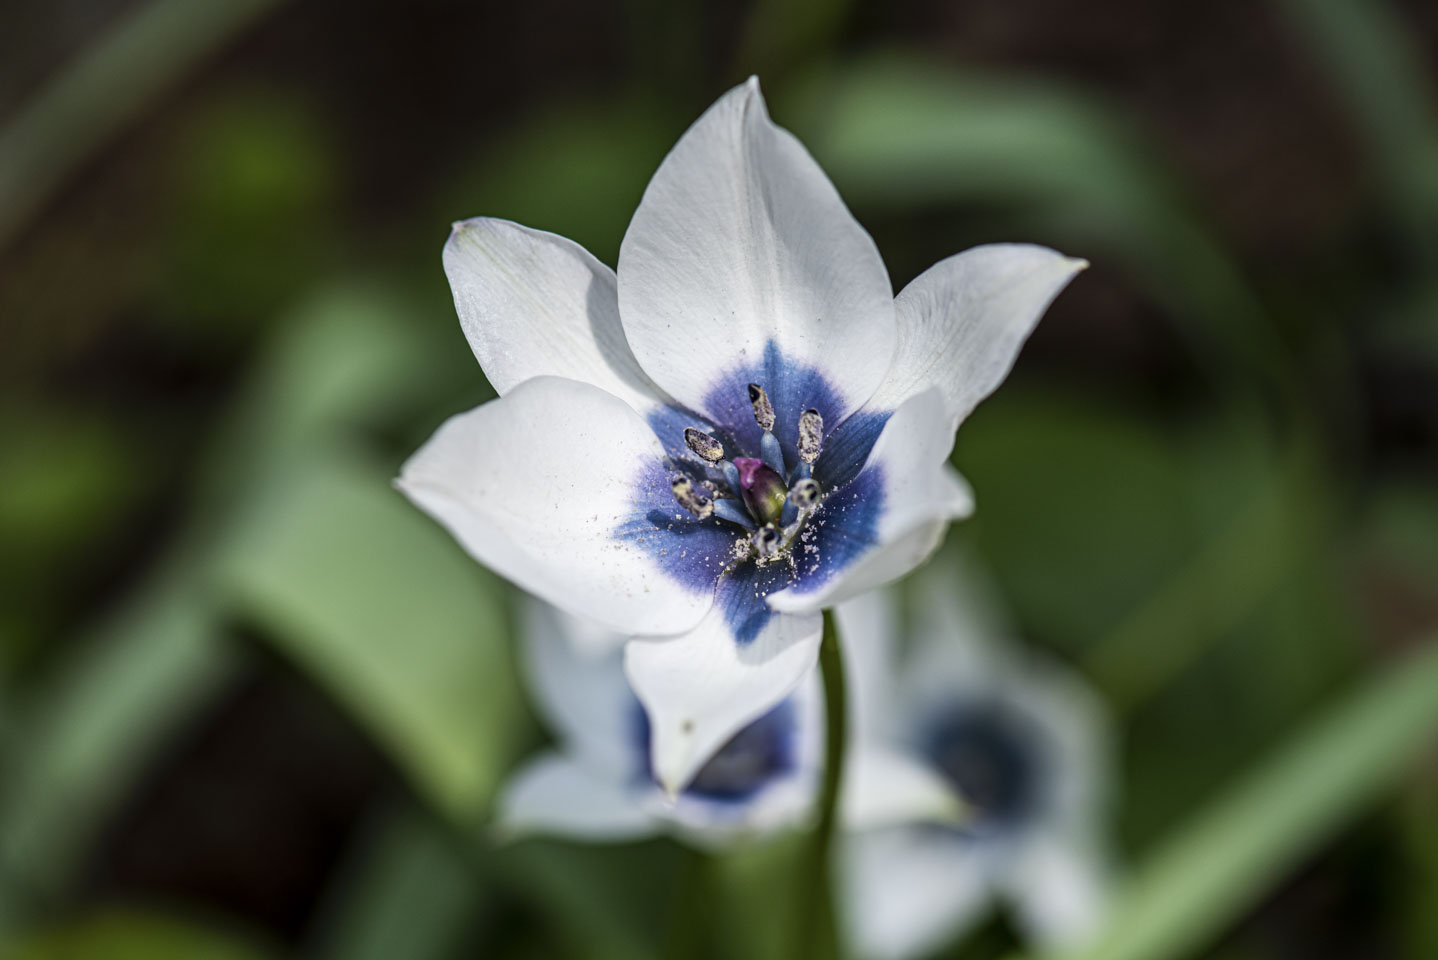 White flower with blue center